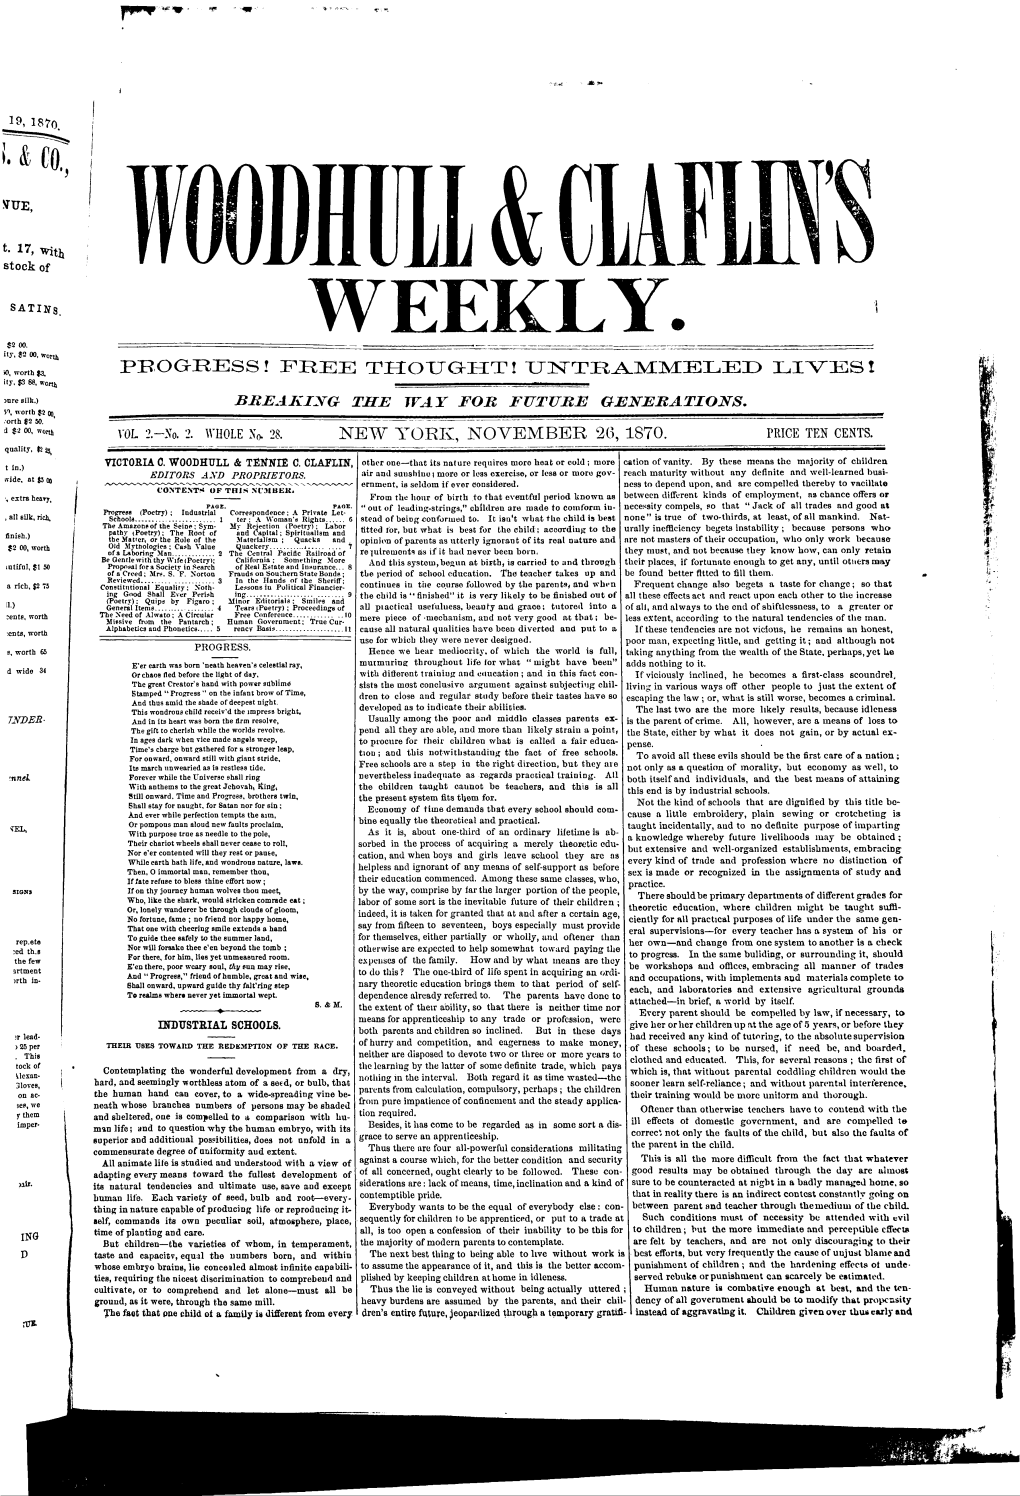 Woodhull and Claflins Weekly V2 N2 Nov 26 1870